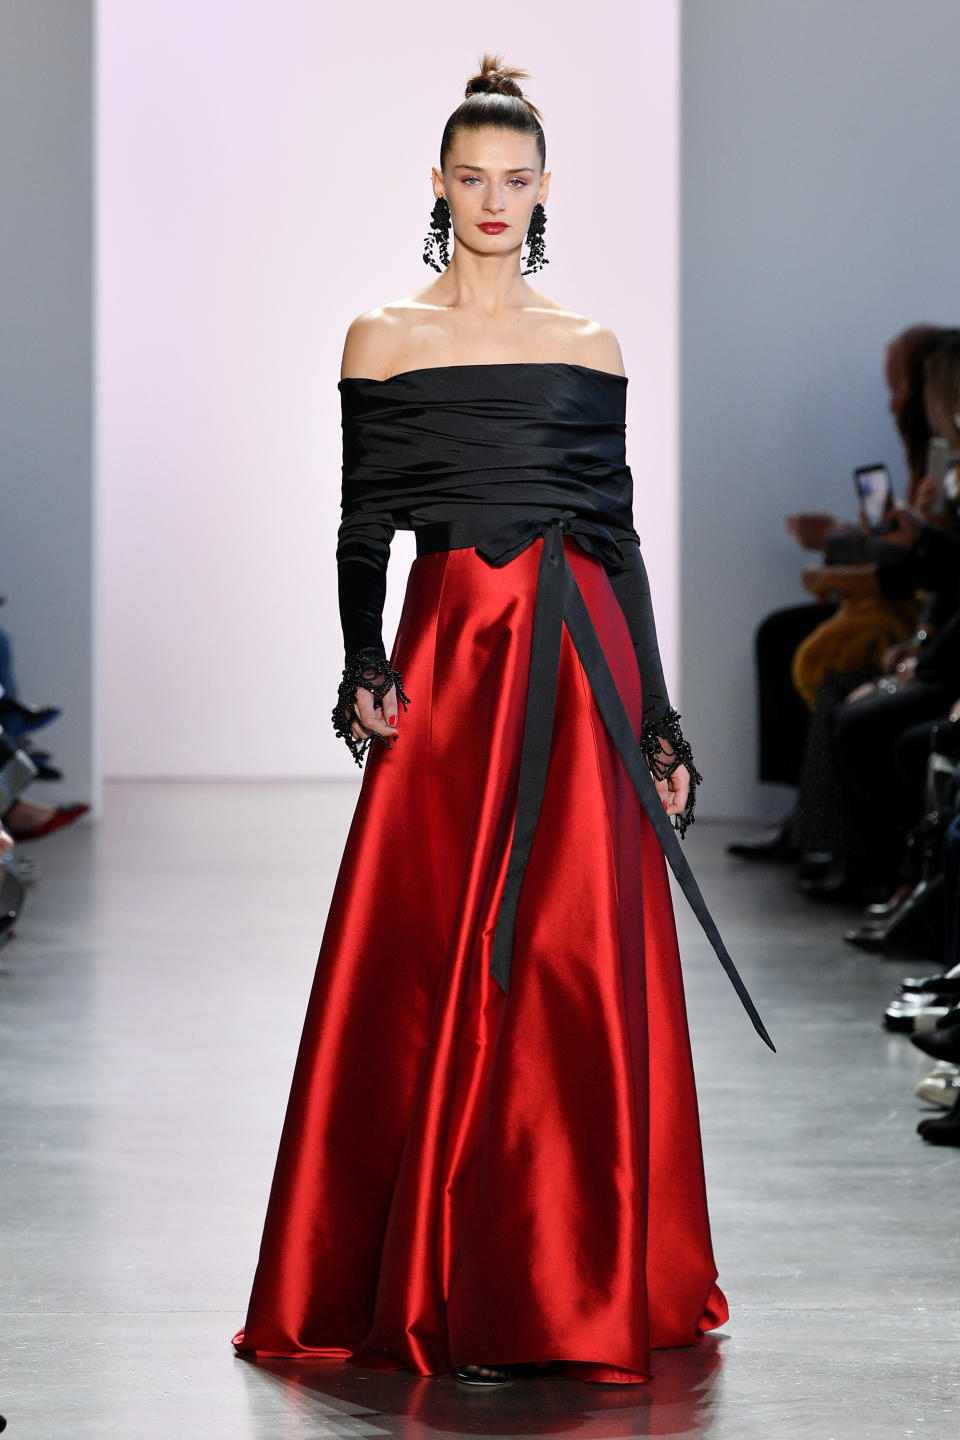 A model walks the runway during the Badgley Mischka show at New York Fashion Week on Feb. 8.